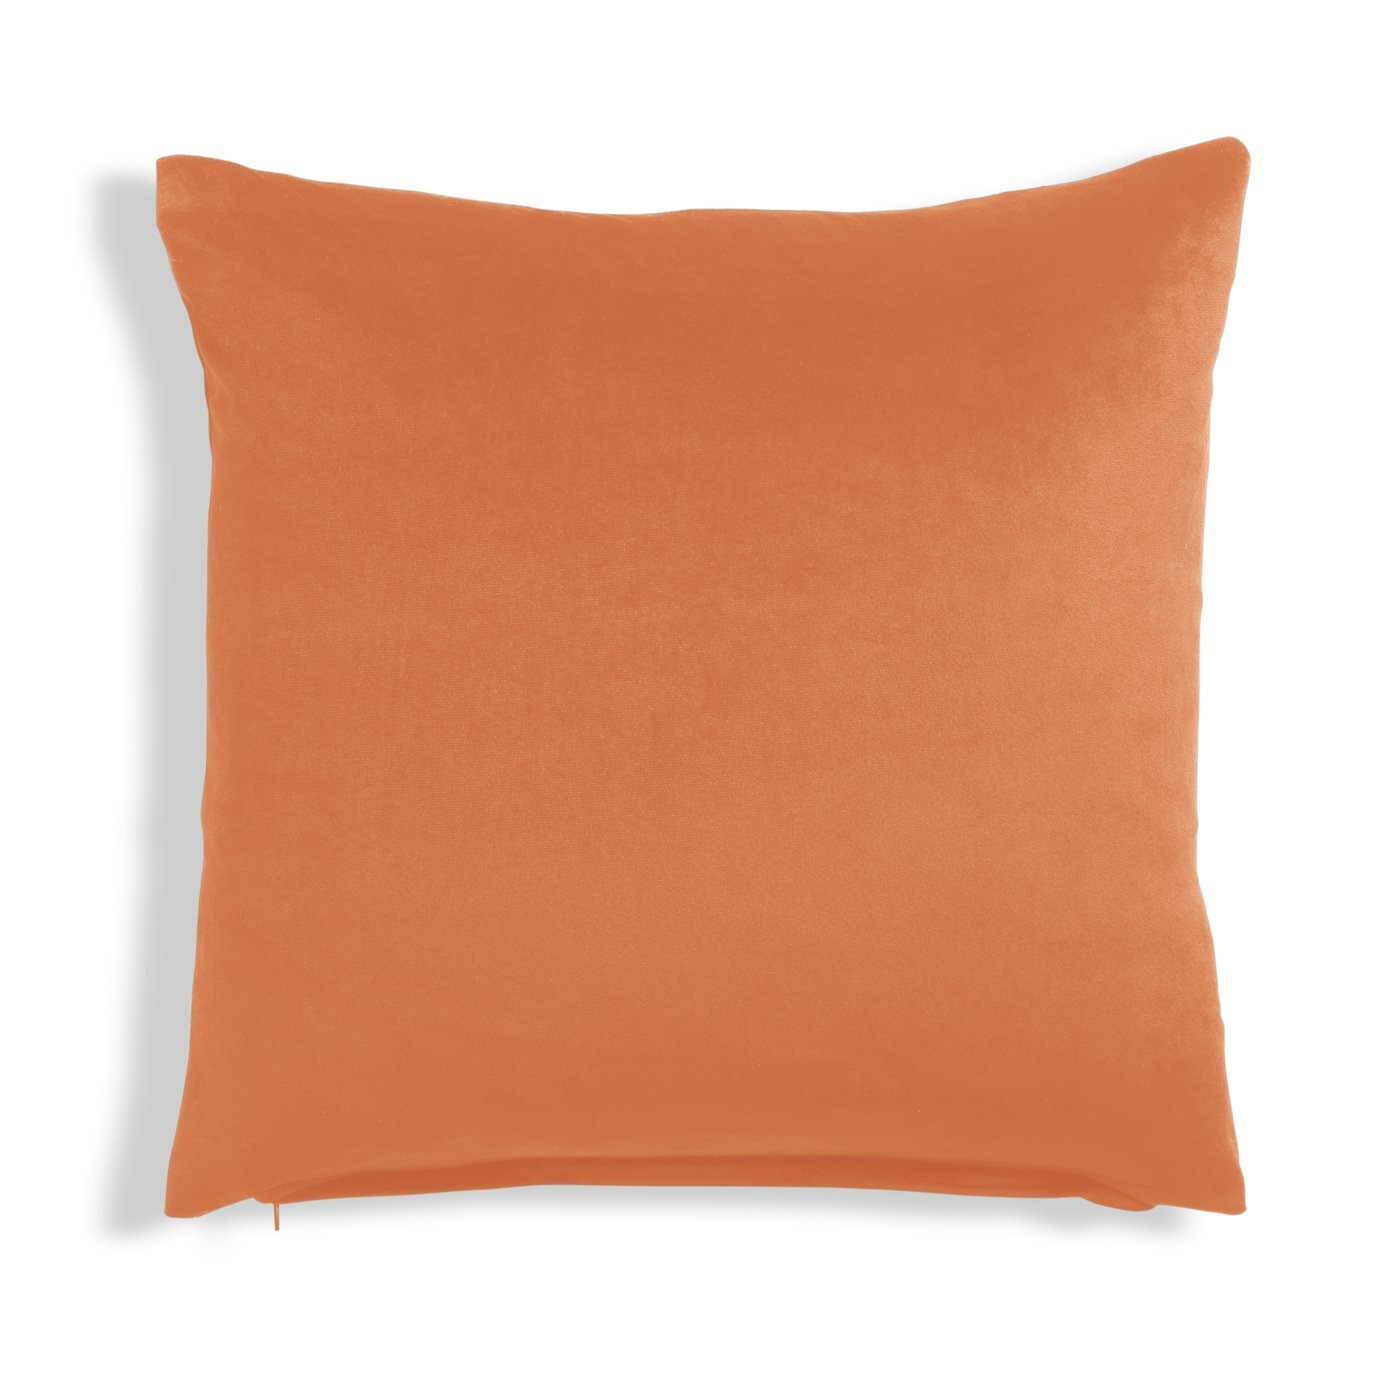 Habitat Velvet Cushion - Orange - 43x43cm - image 1